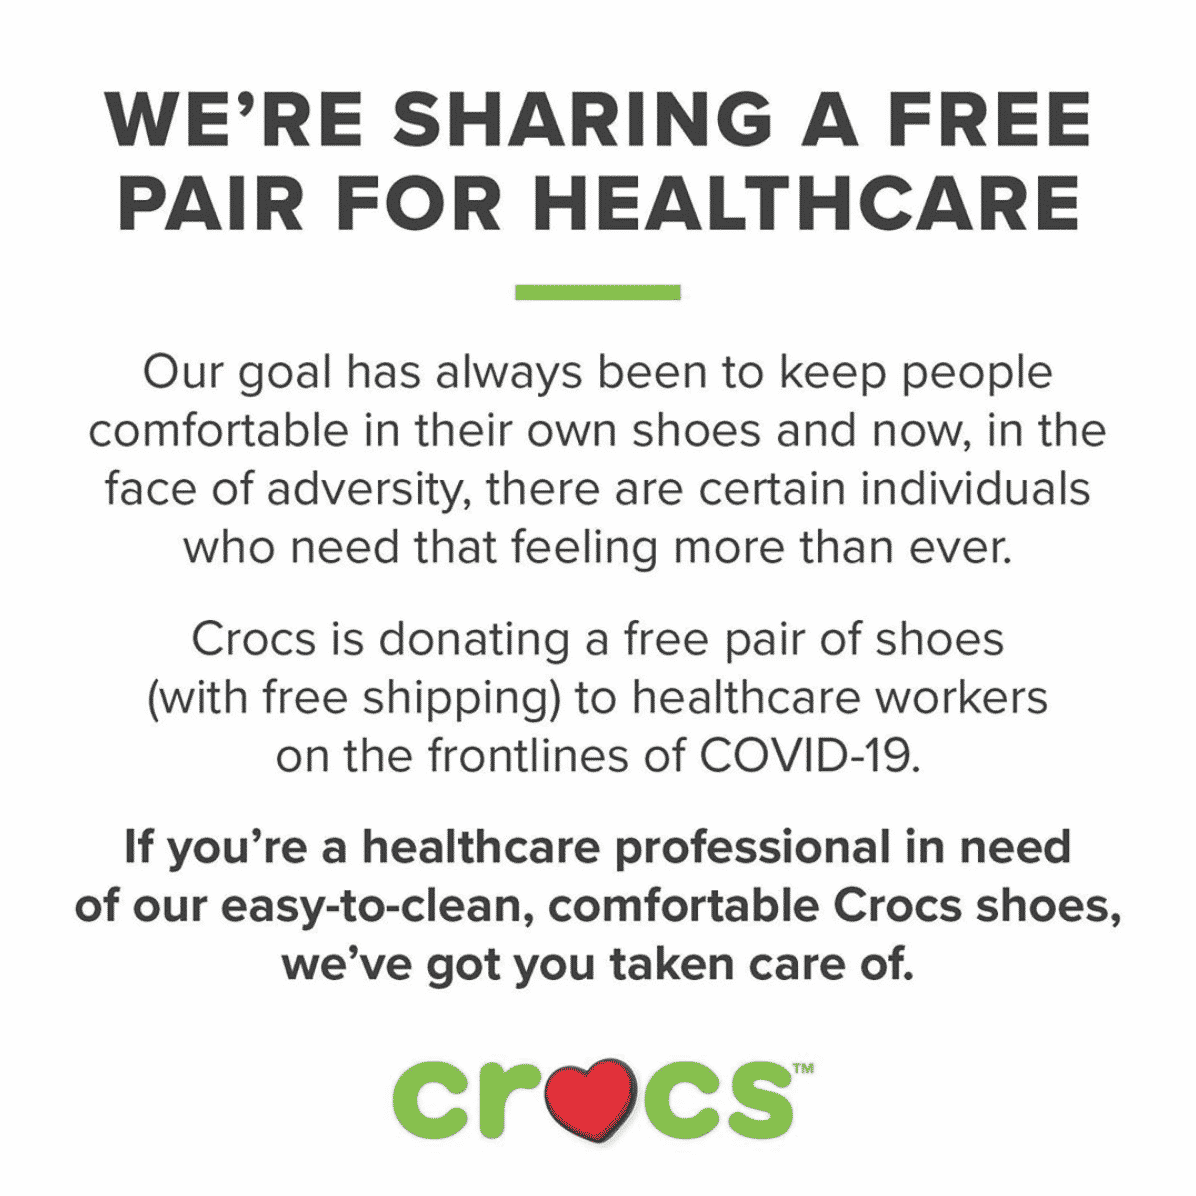 crocs giveaway to healthcare workers